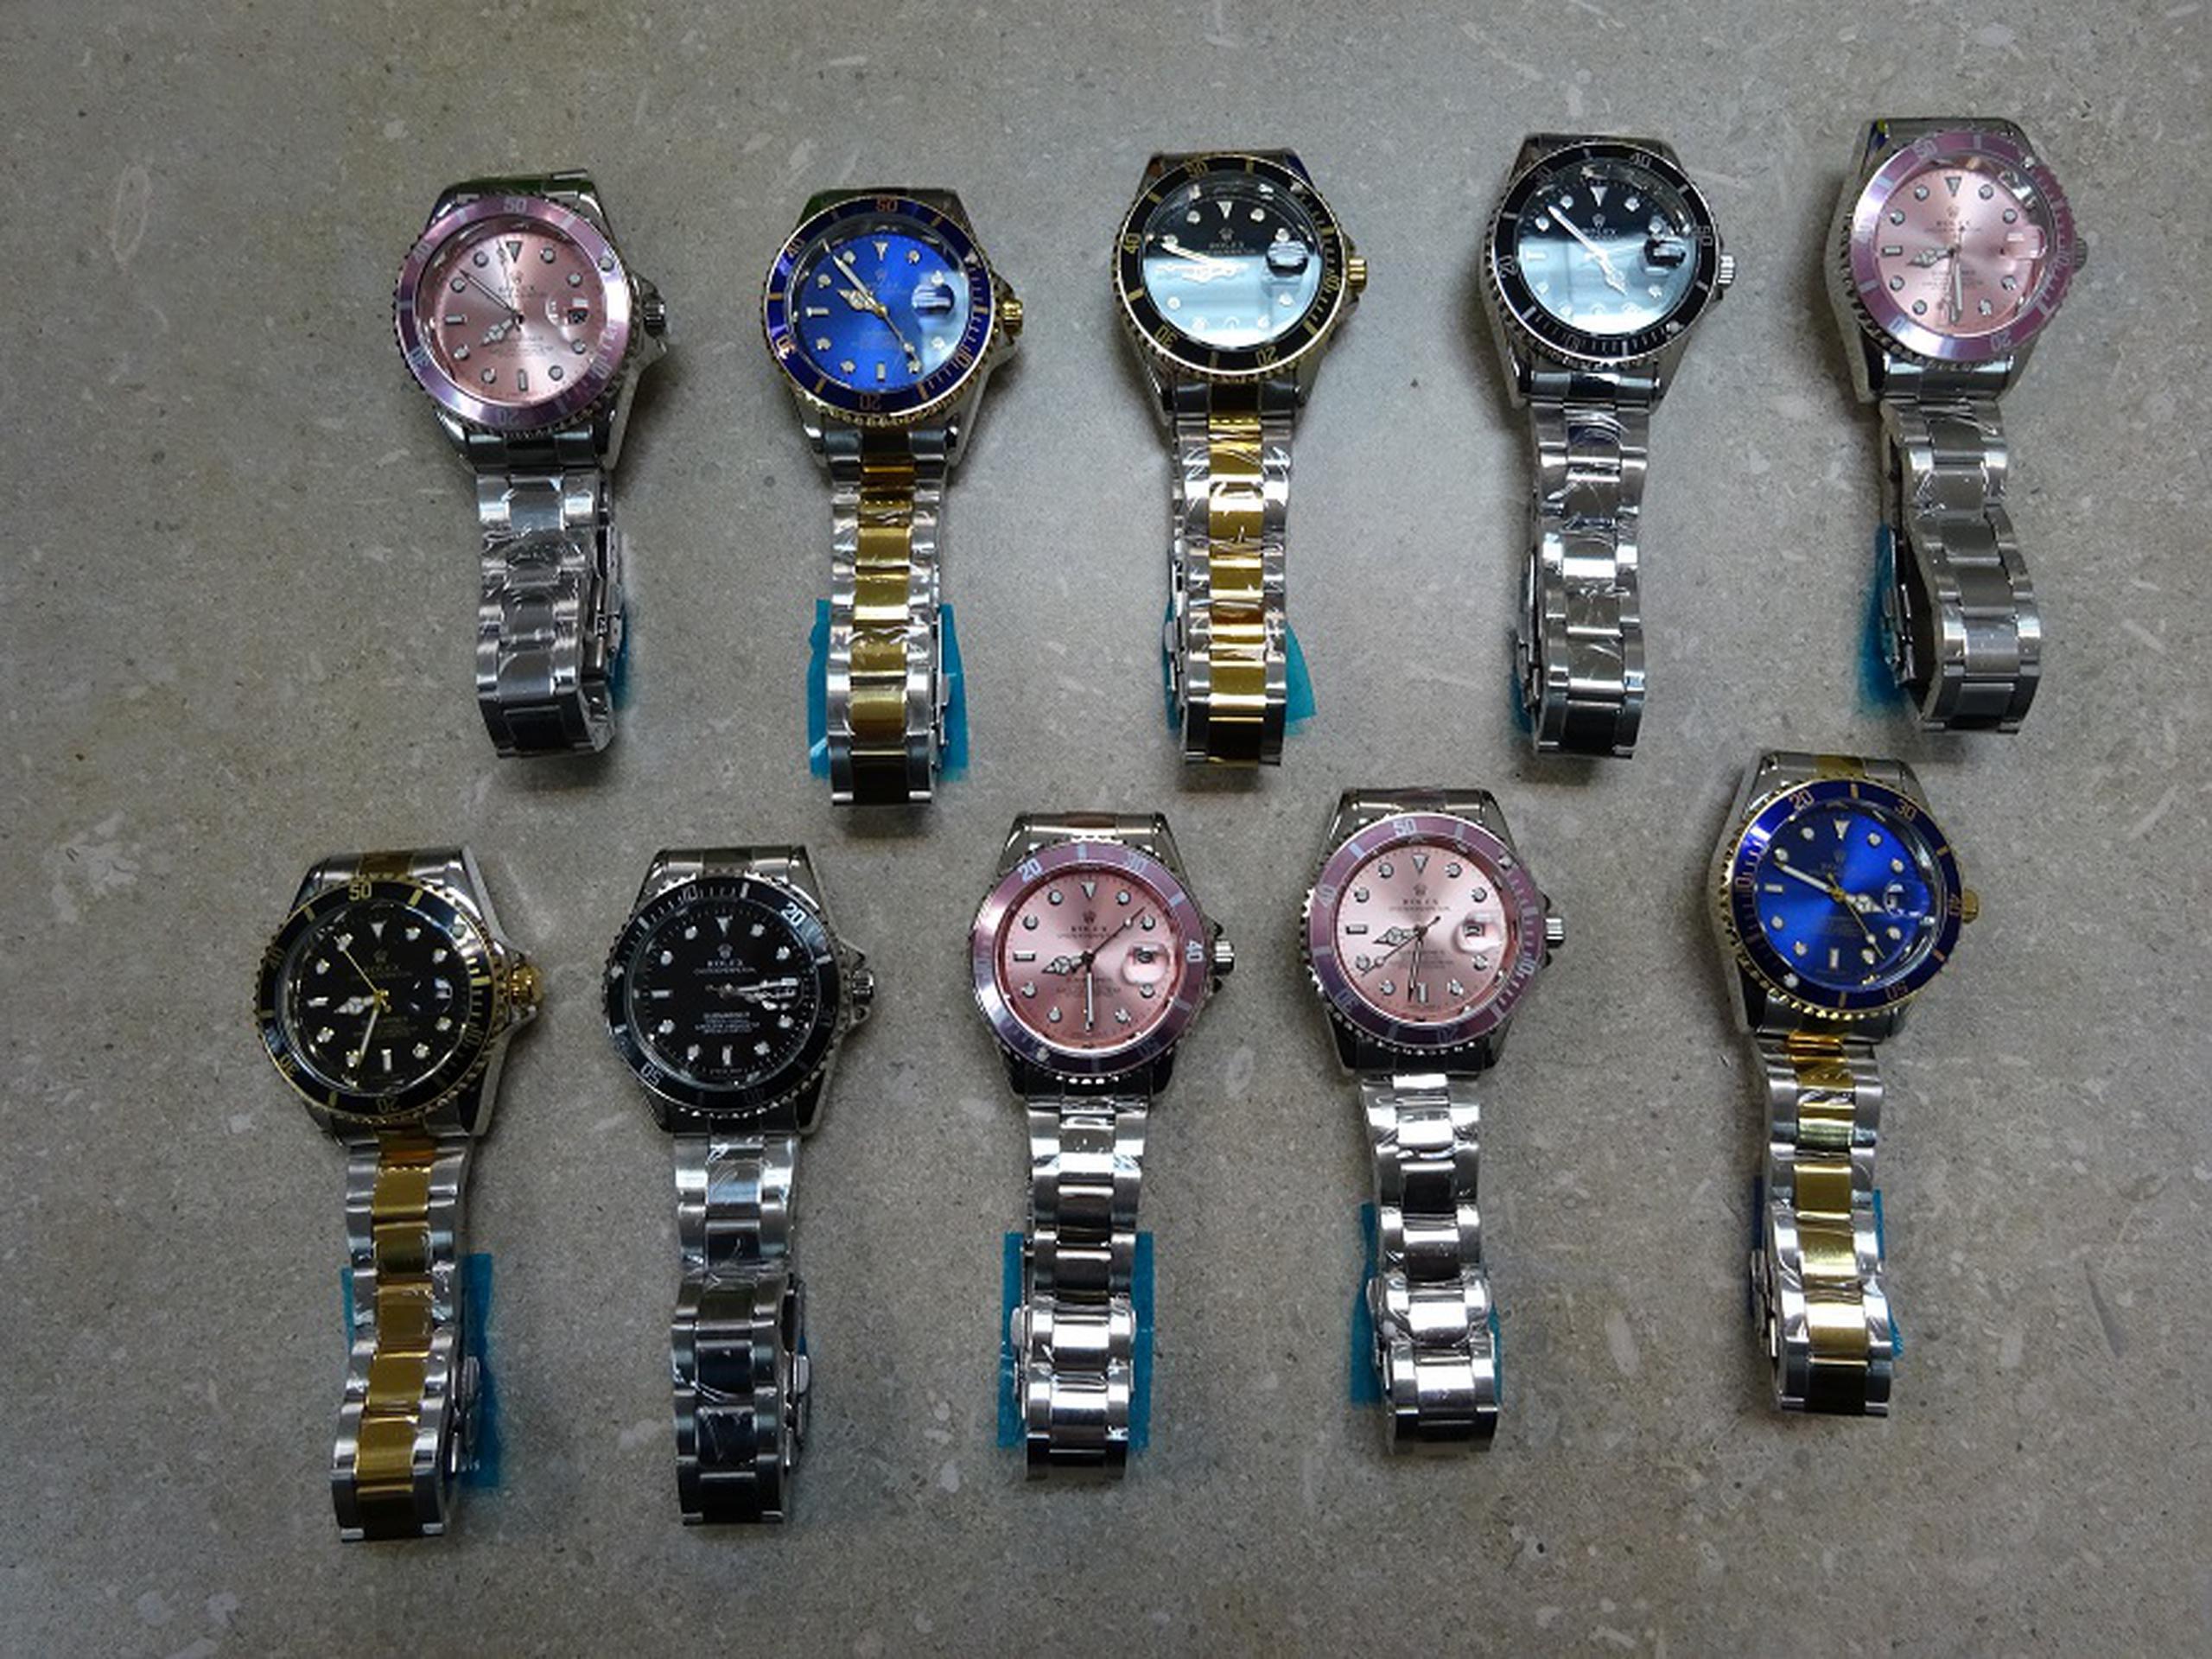 Parte de los relojes falsificados Rolex.